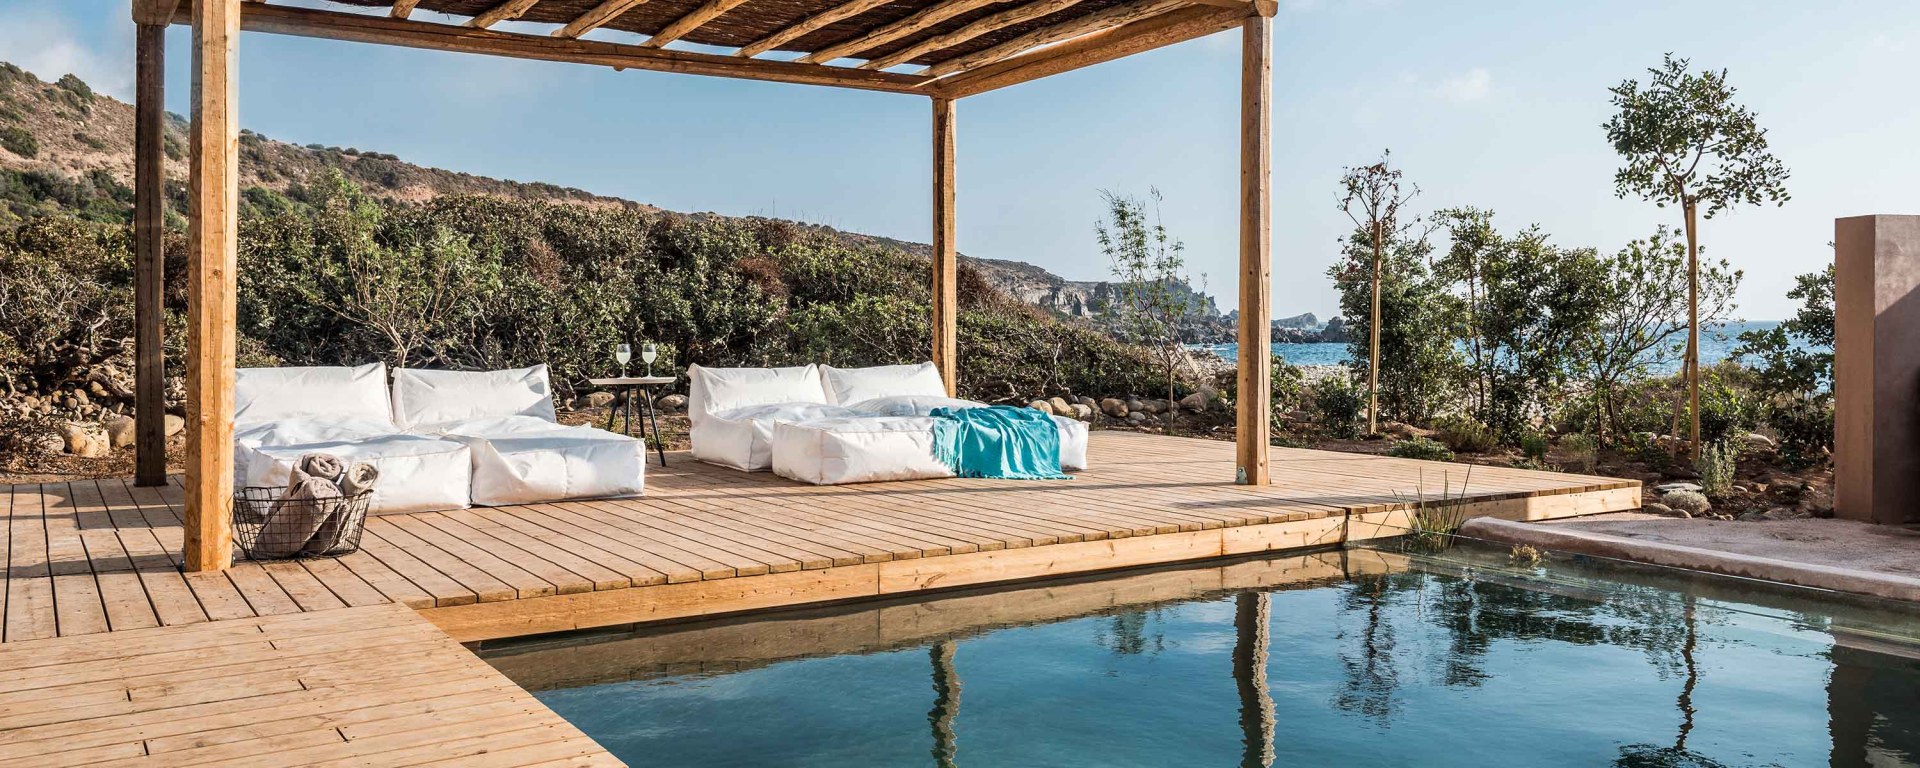 exklusive Ferienvilla Kreta am Strand - Livadia Beach House